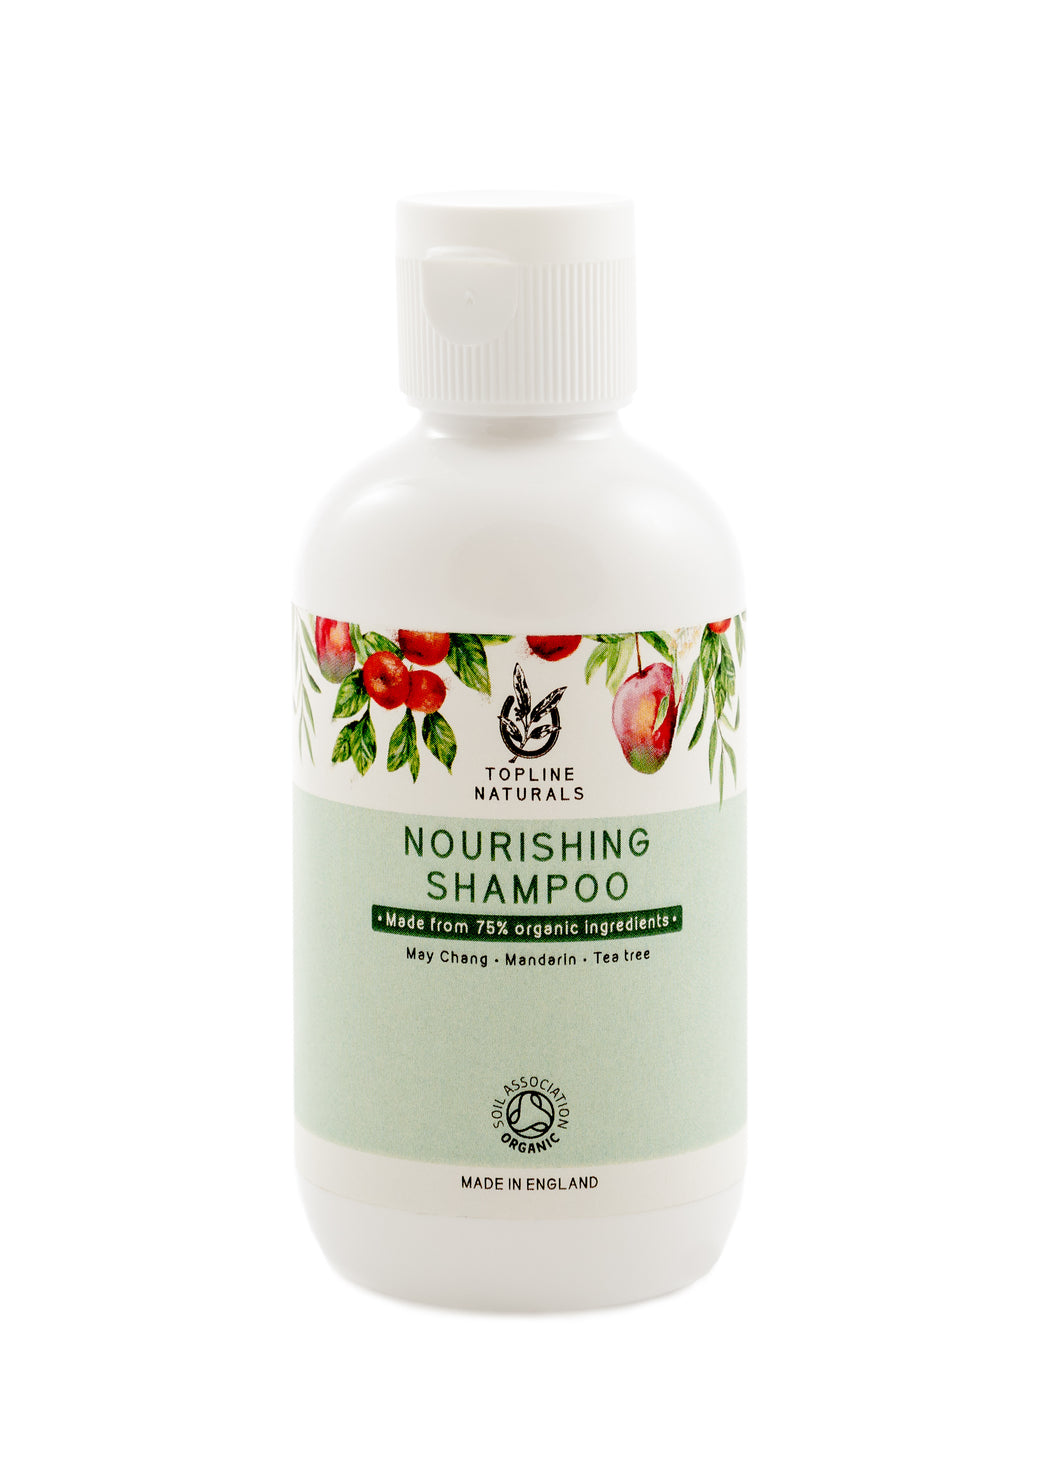 Topline Naturals Nourishing Shampoo